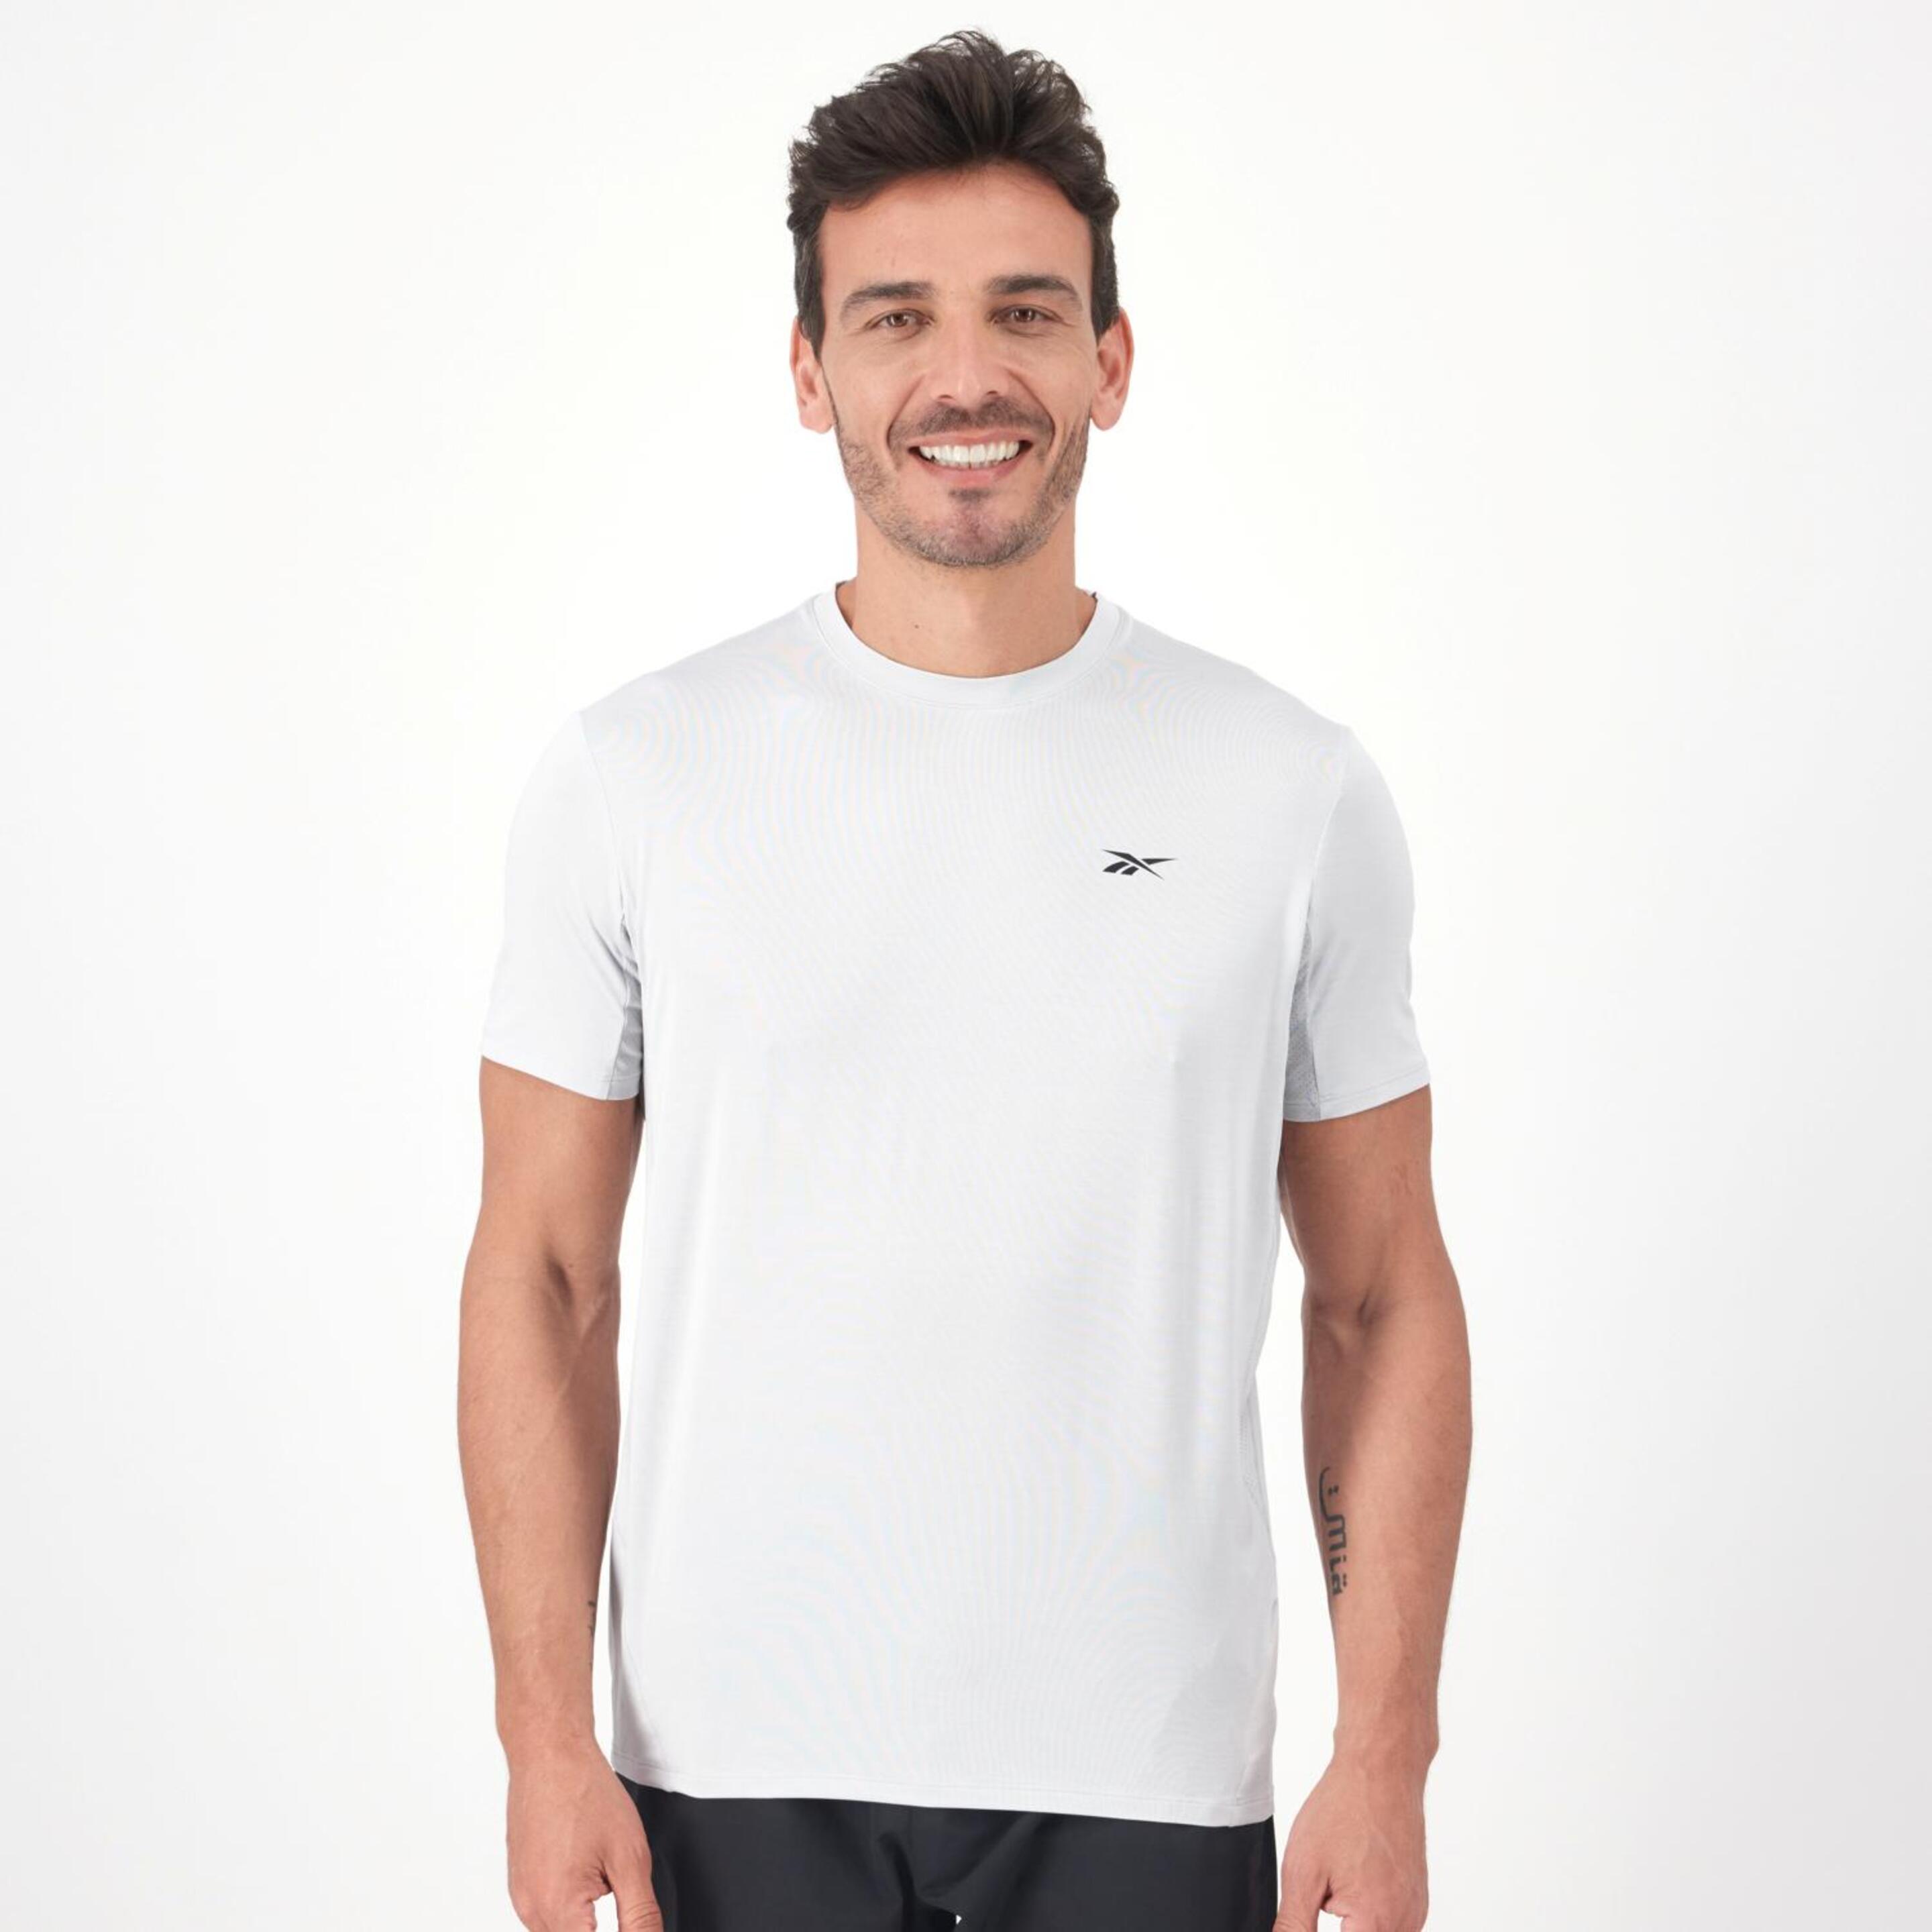 Reebok Athlete 2.0 Chill - gris - Camiseta Running Hombre